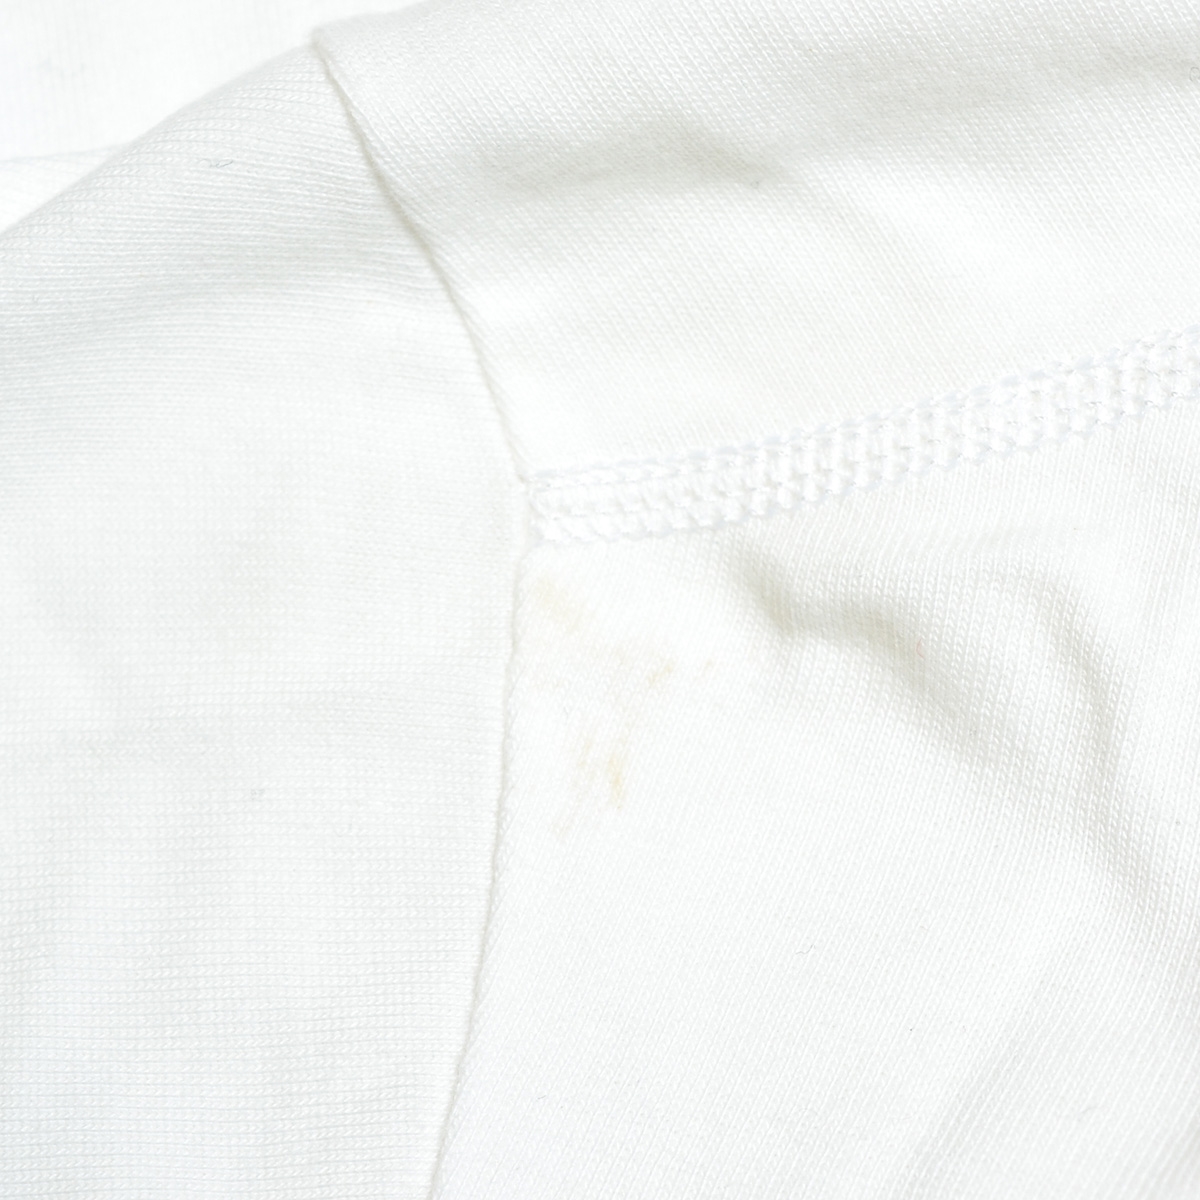 〇476716 Merz b. Schwanen メルツベーシュヴァ―ネン ○Tシャツ 半袖 トップス サイズ6 メンズ ドイツ製 ホワイト 無地_画像5